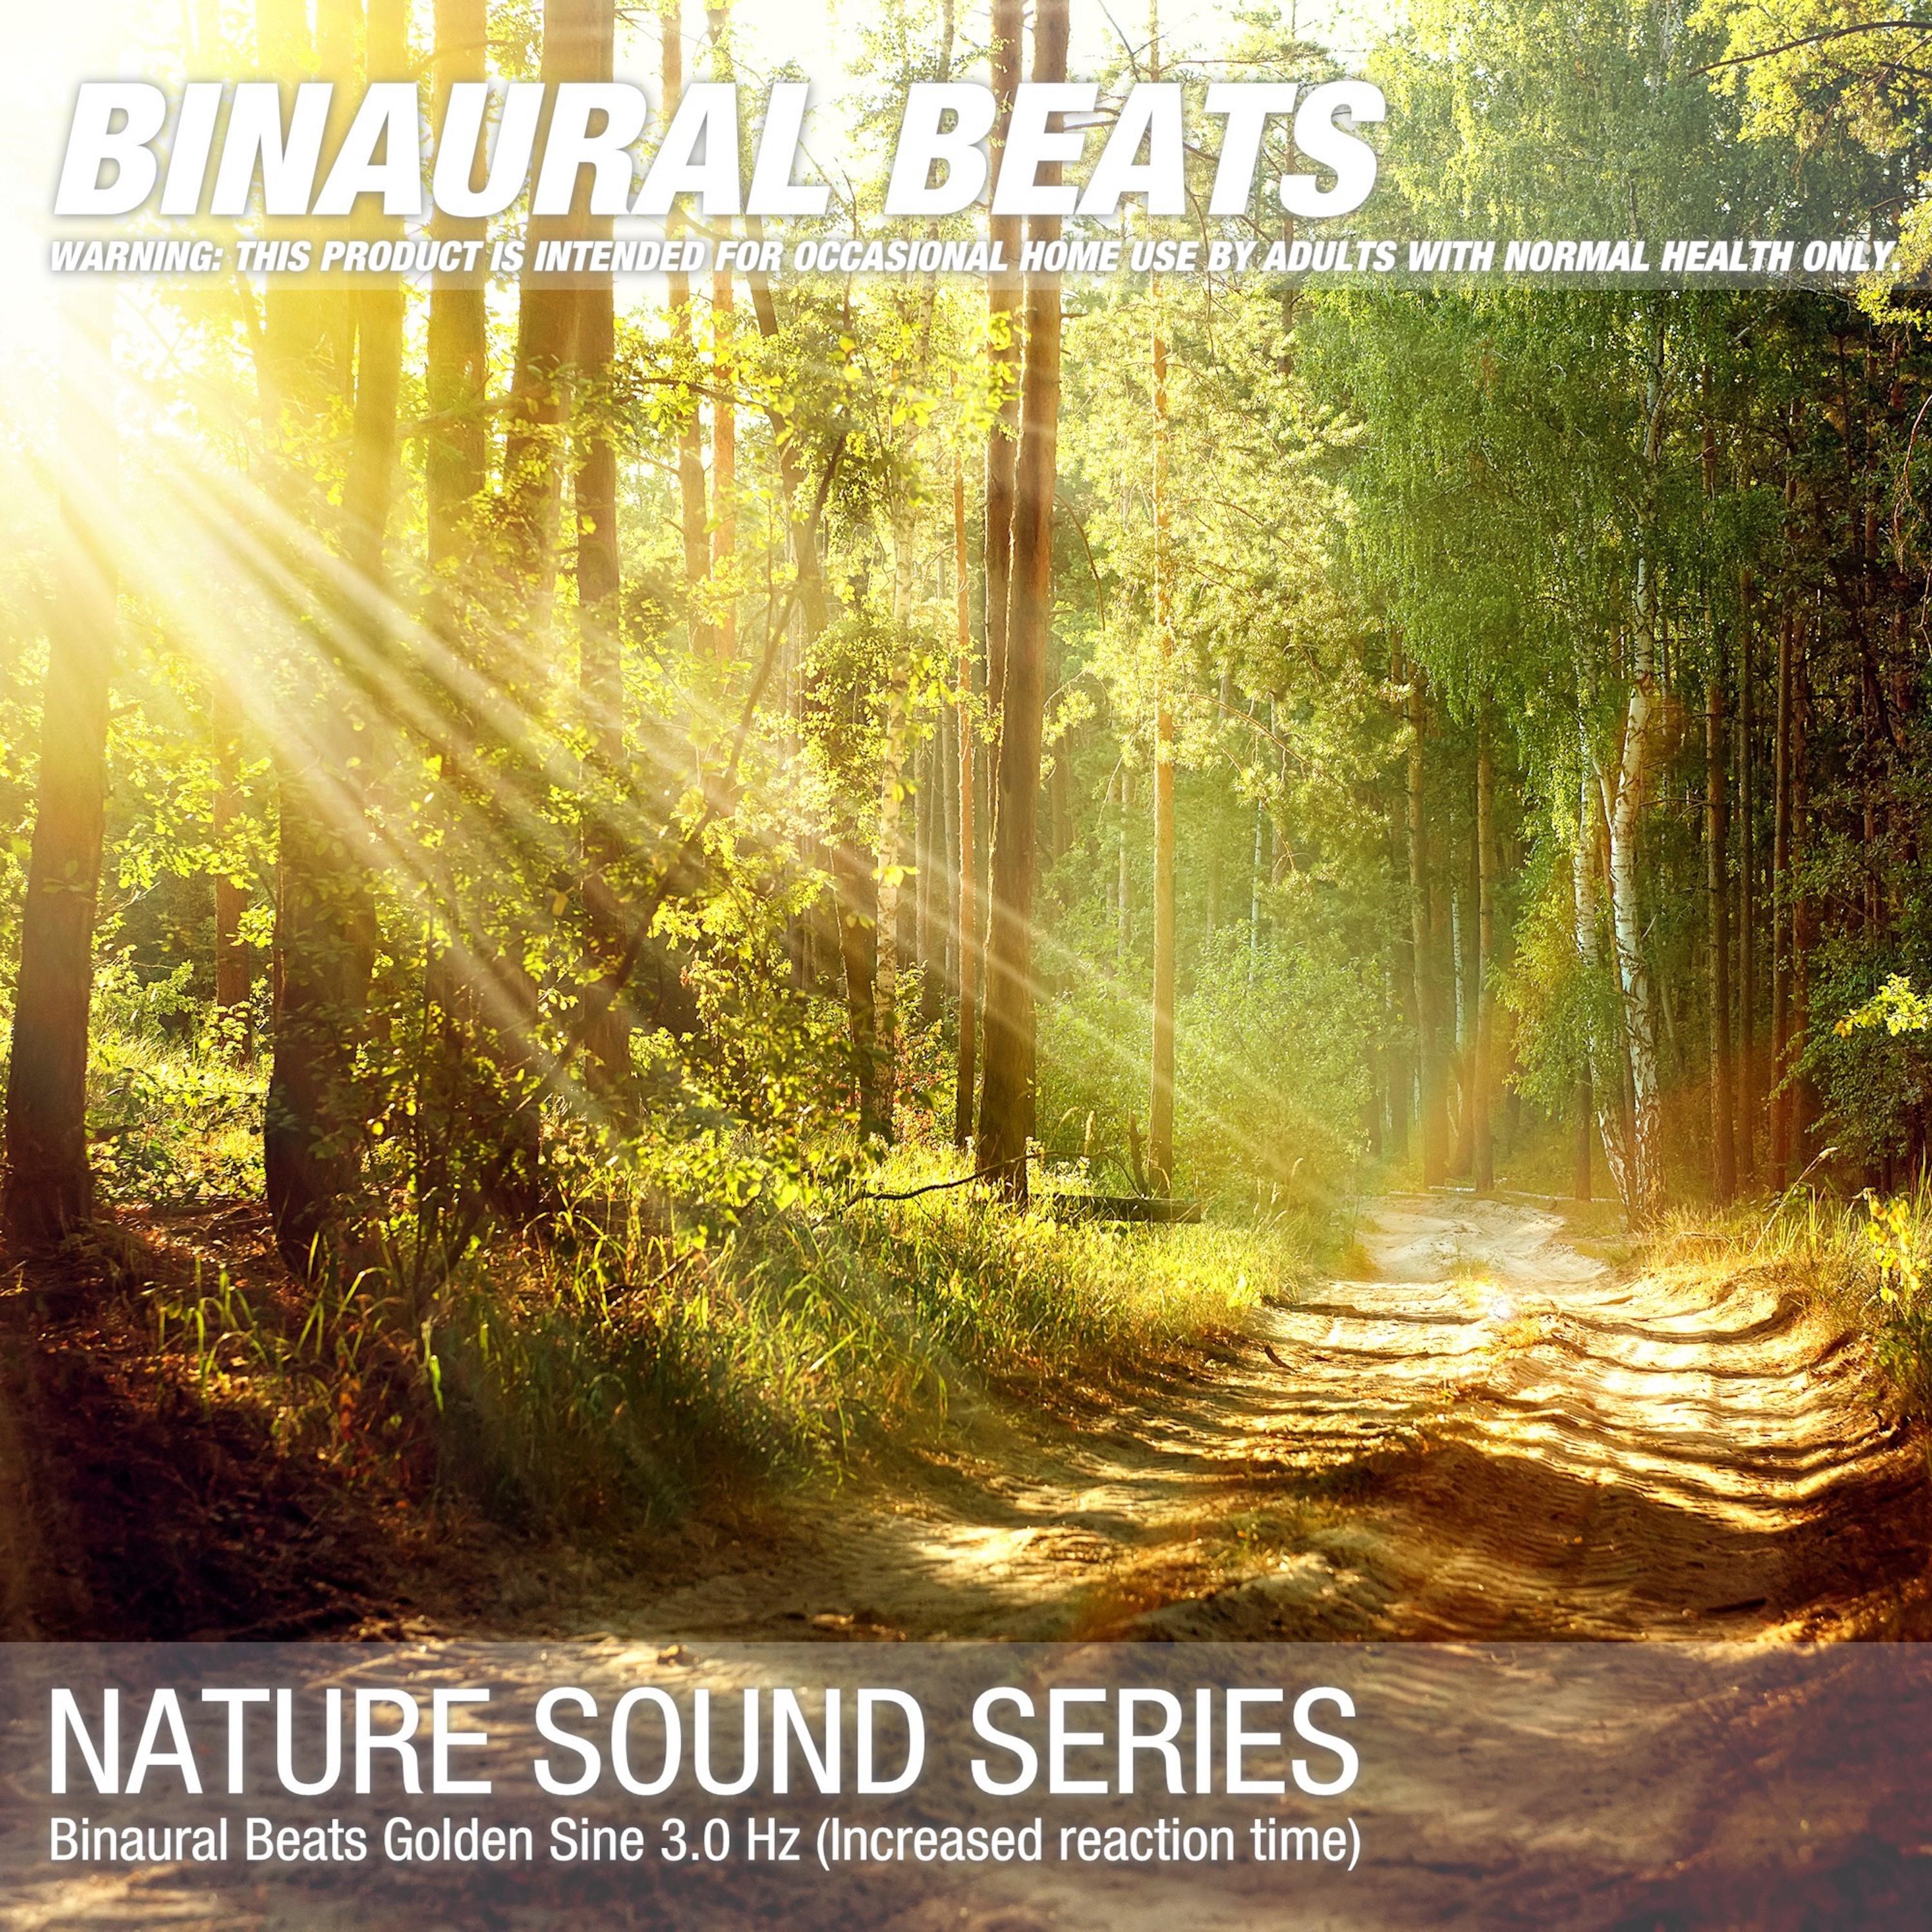 Binaural Beats Golden Sine 3.0 Hz (Increased reaction time)